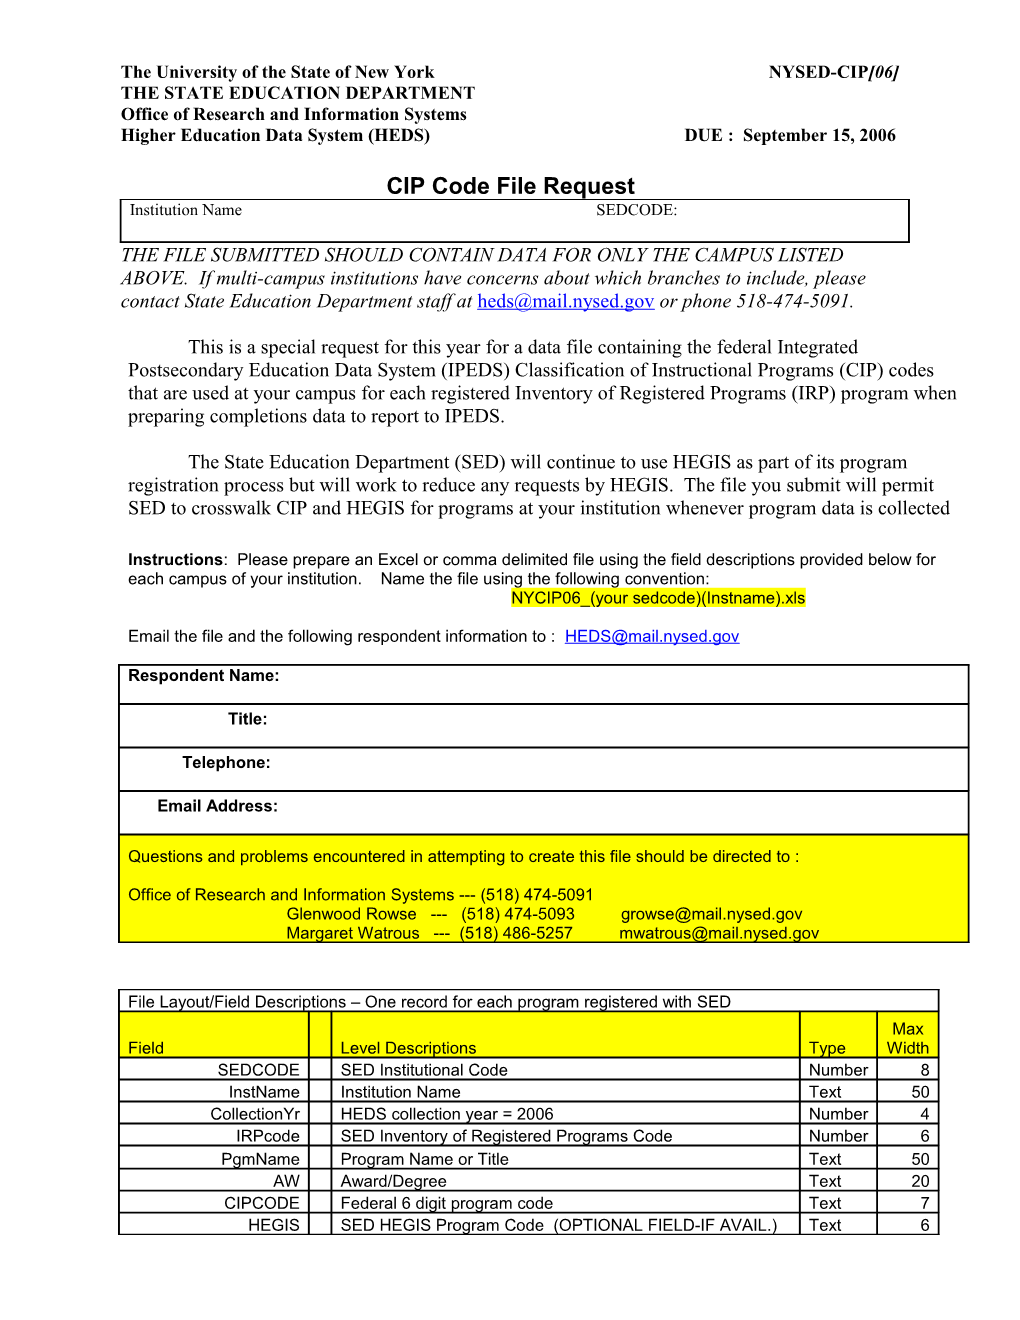 CIP Code File Request